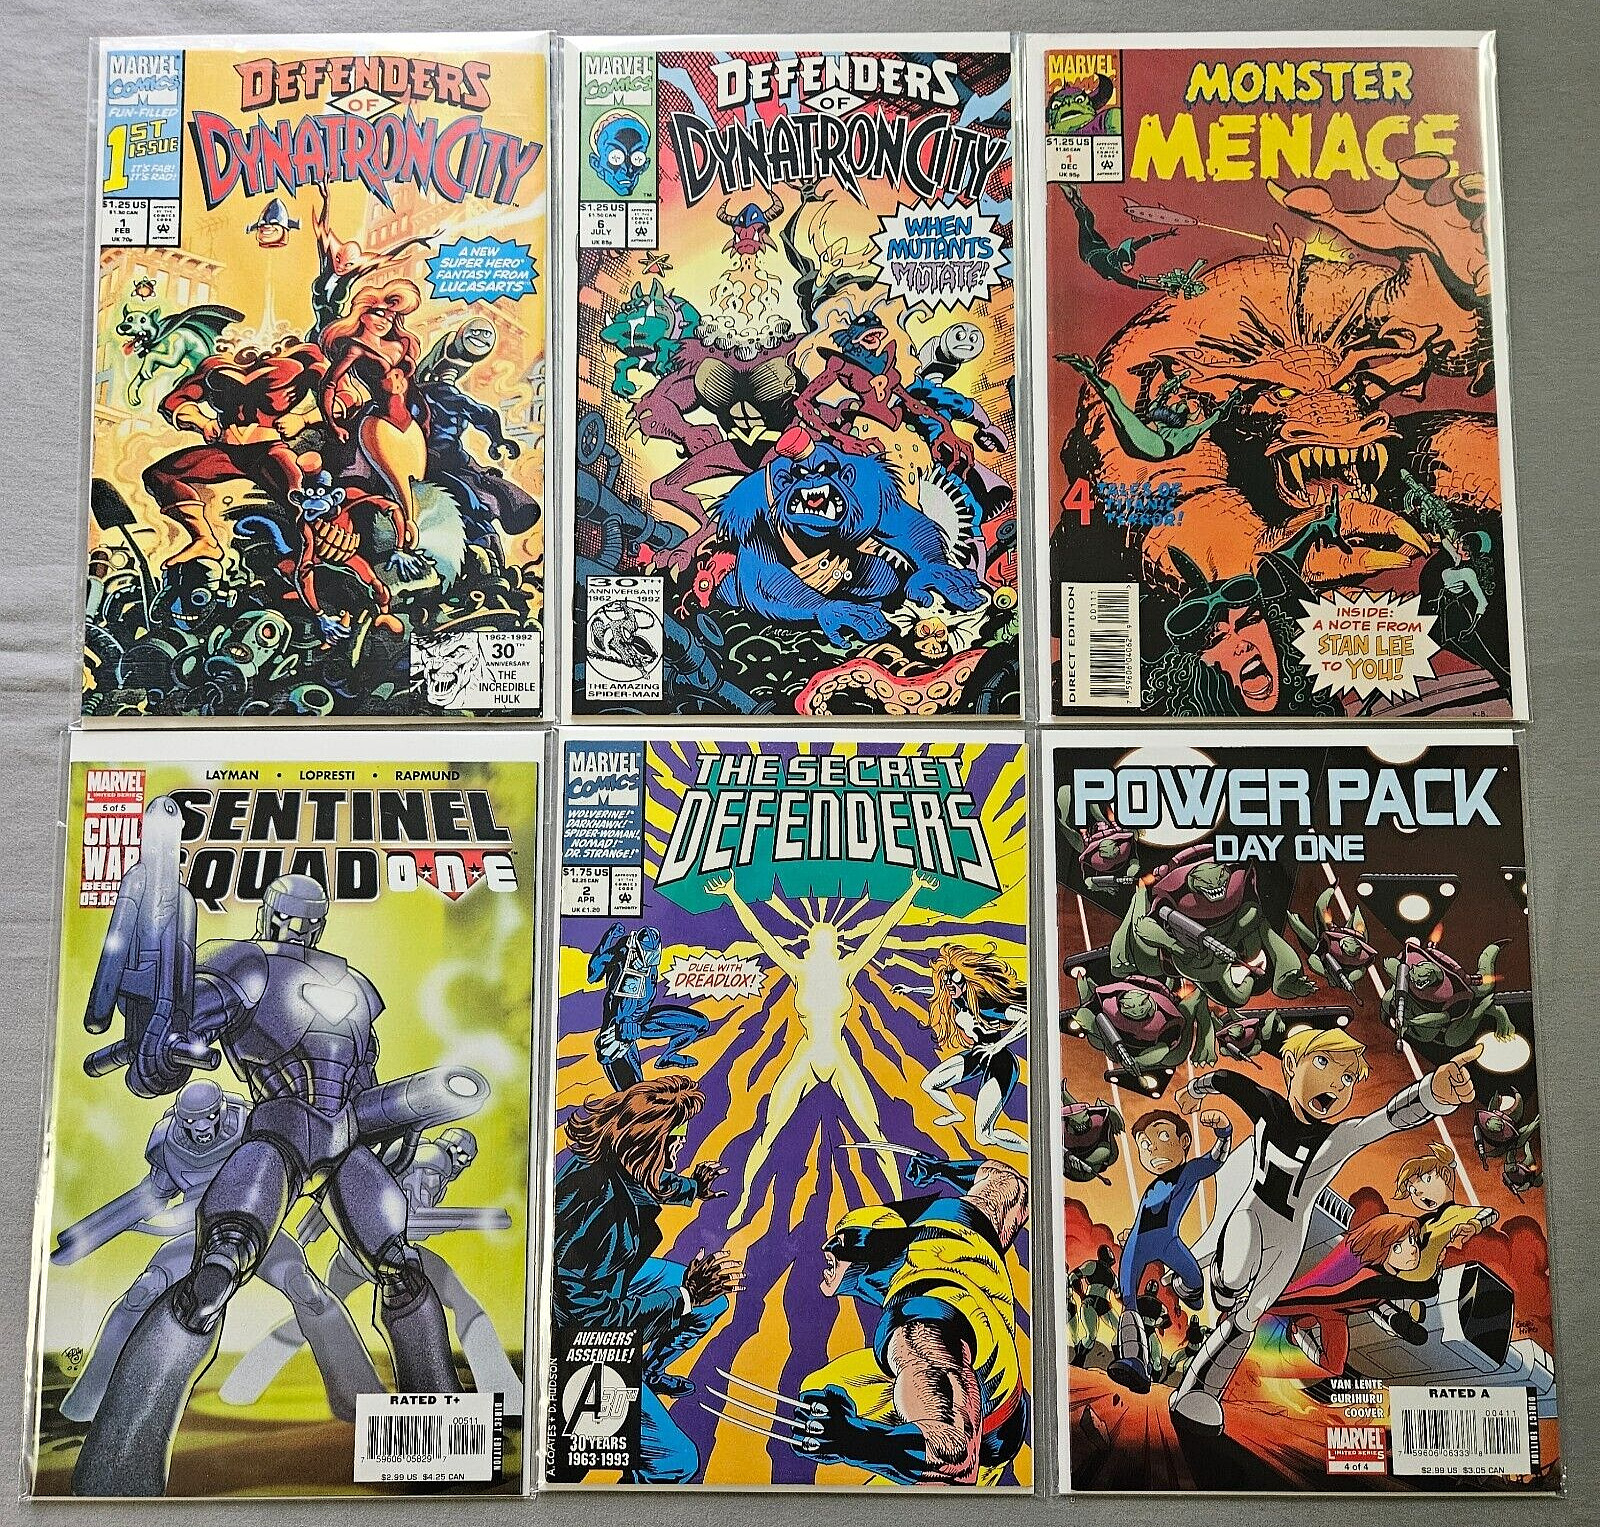 Huge Vtg Mixed Lot of 6 Marvel Comic Books Dynatron City Defenders Power Pack